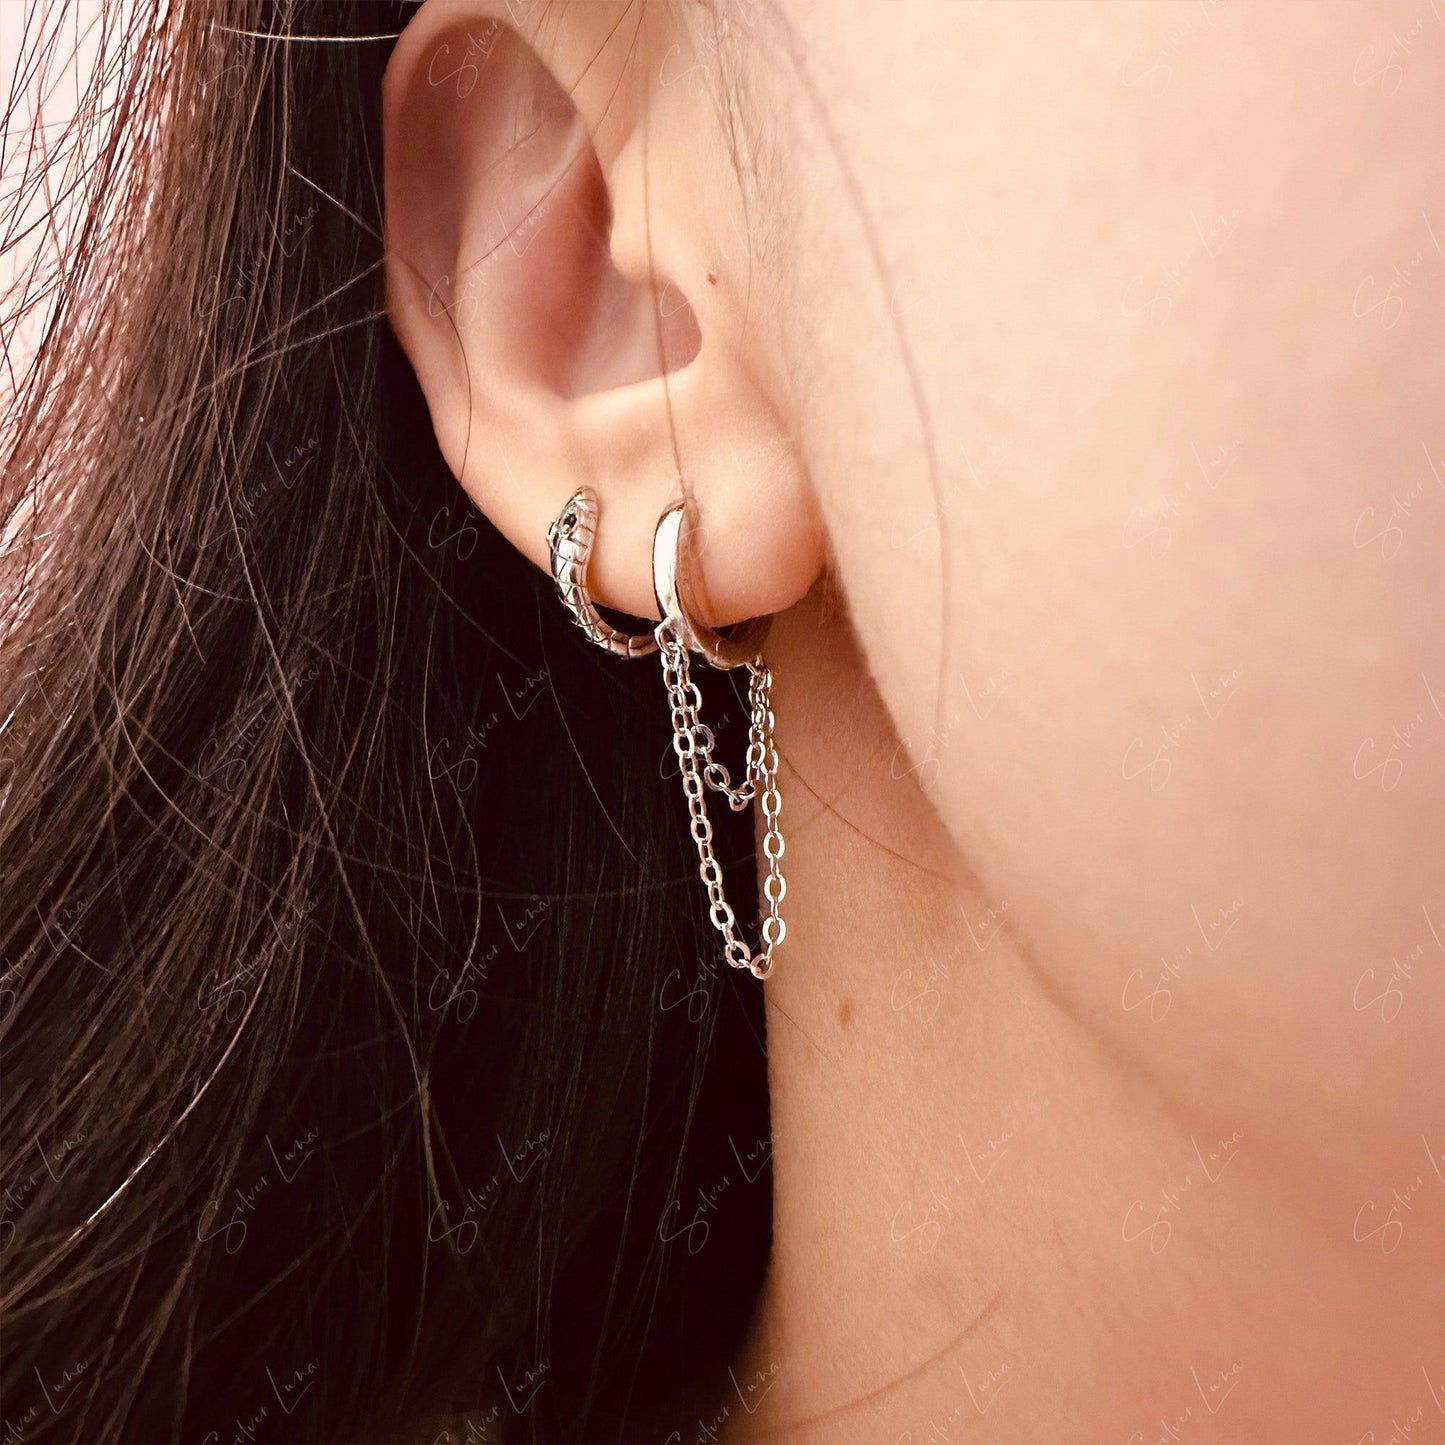 silver hoop earrings with chain